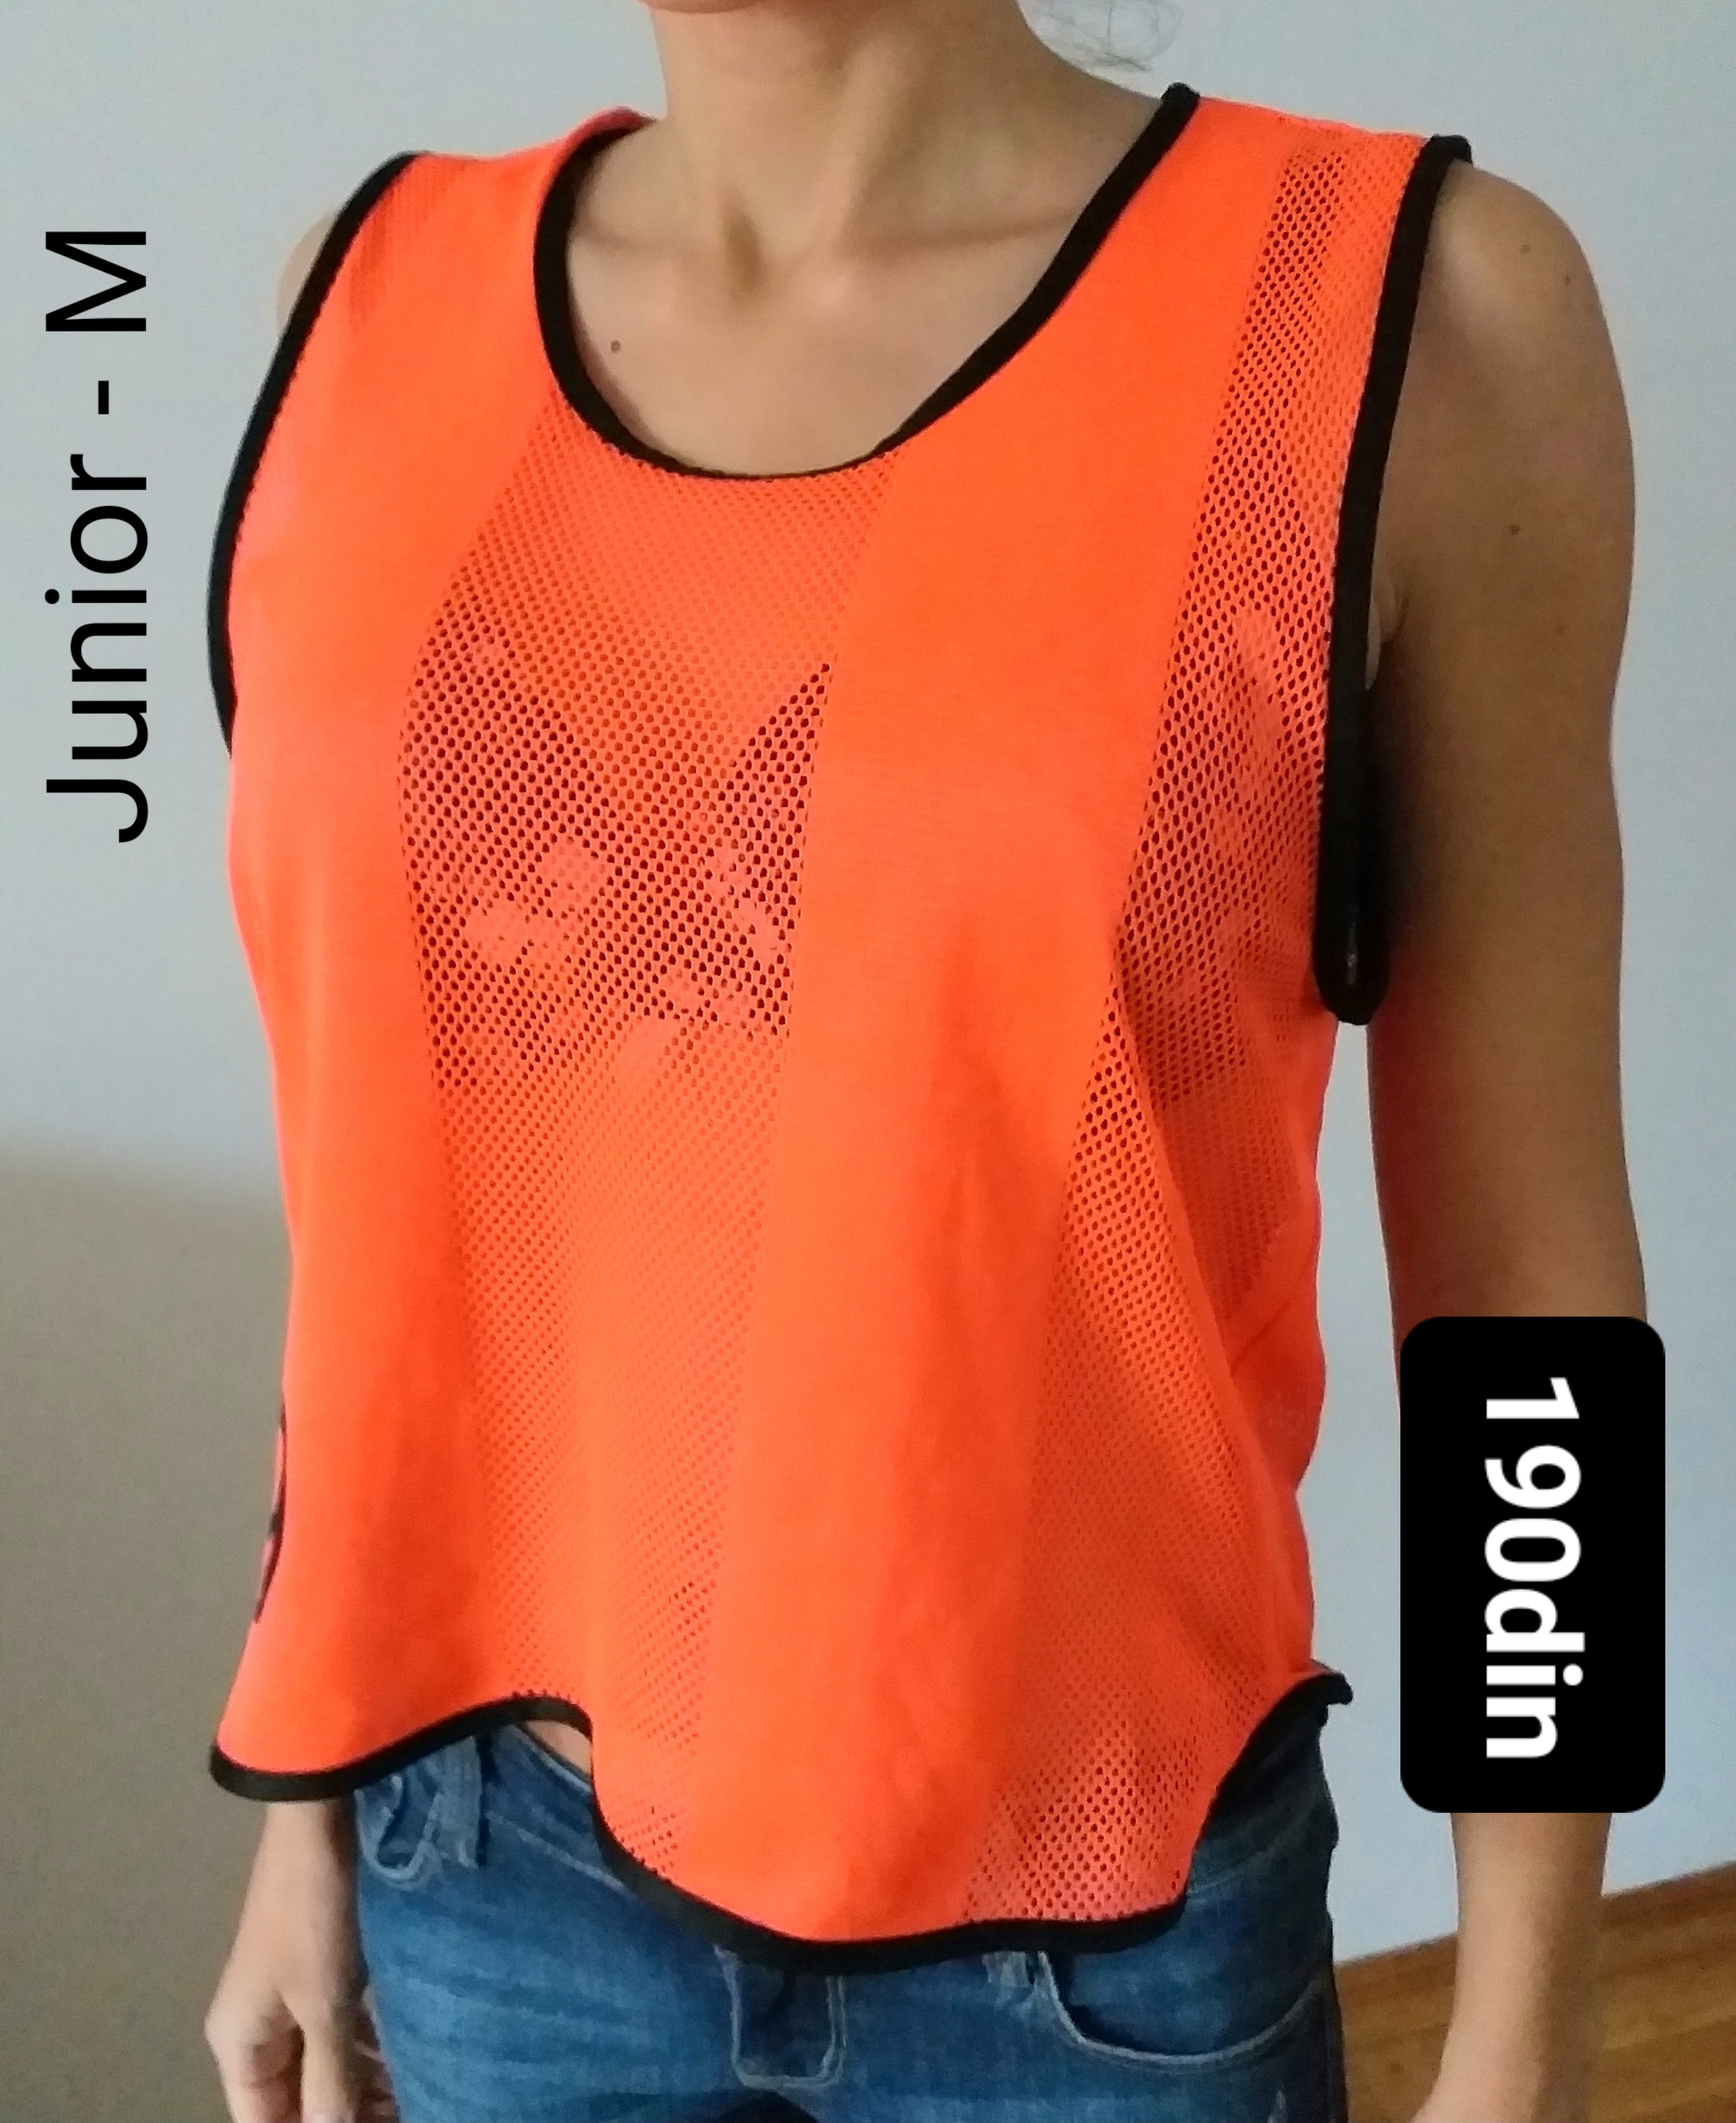 Junior ženska majica dres narandžasta M/38